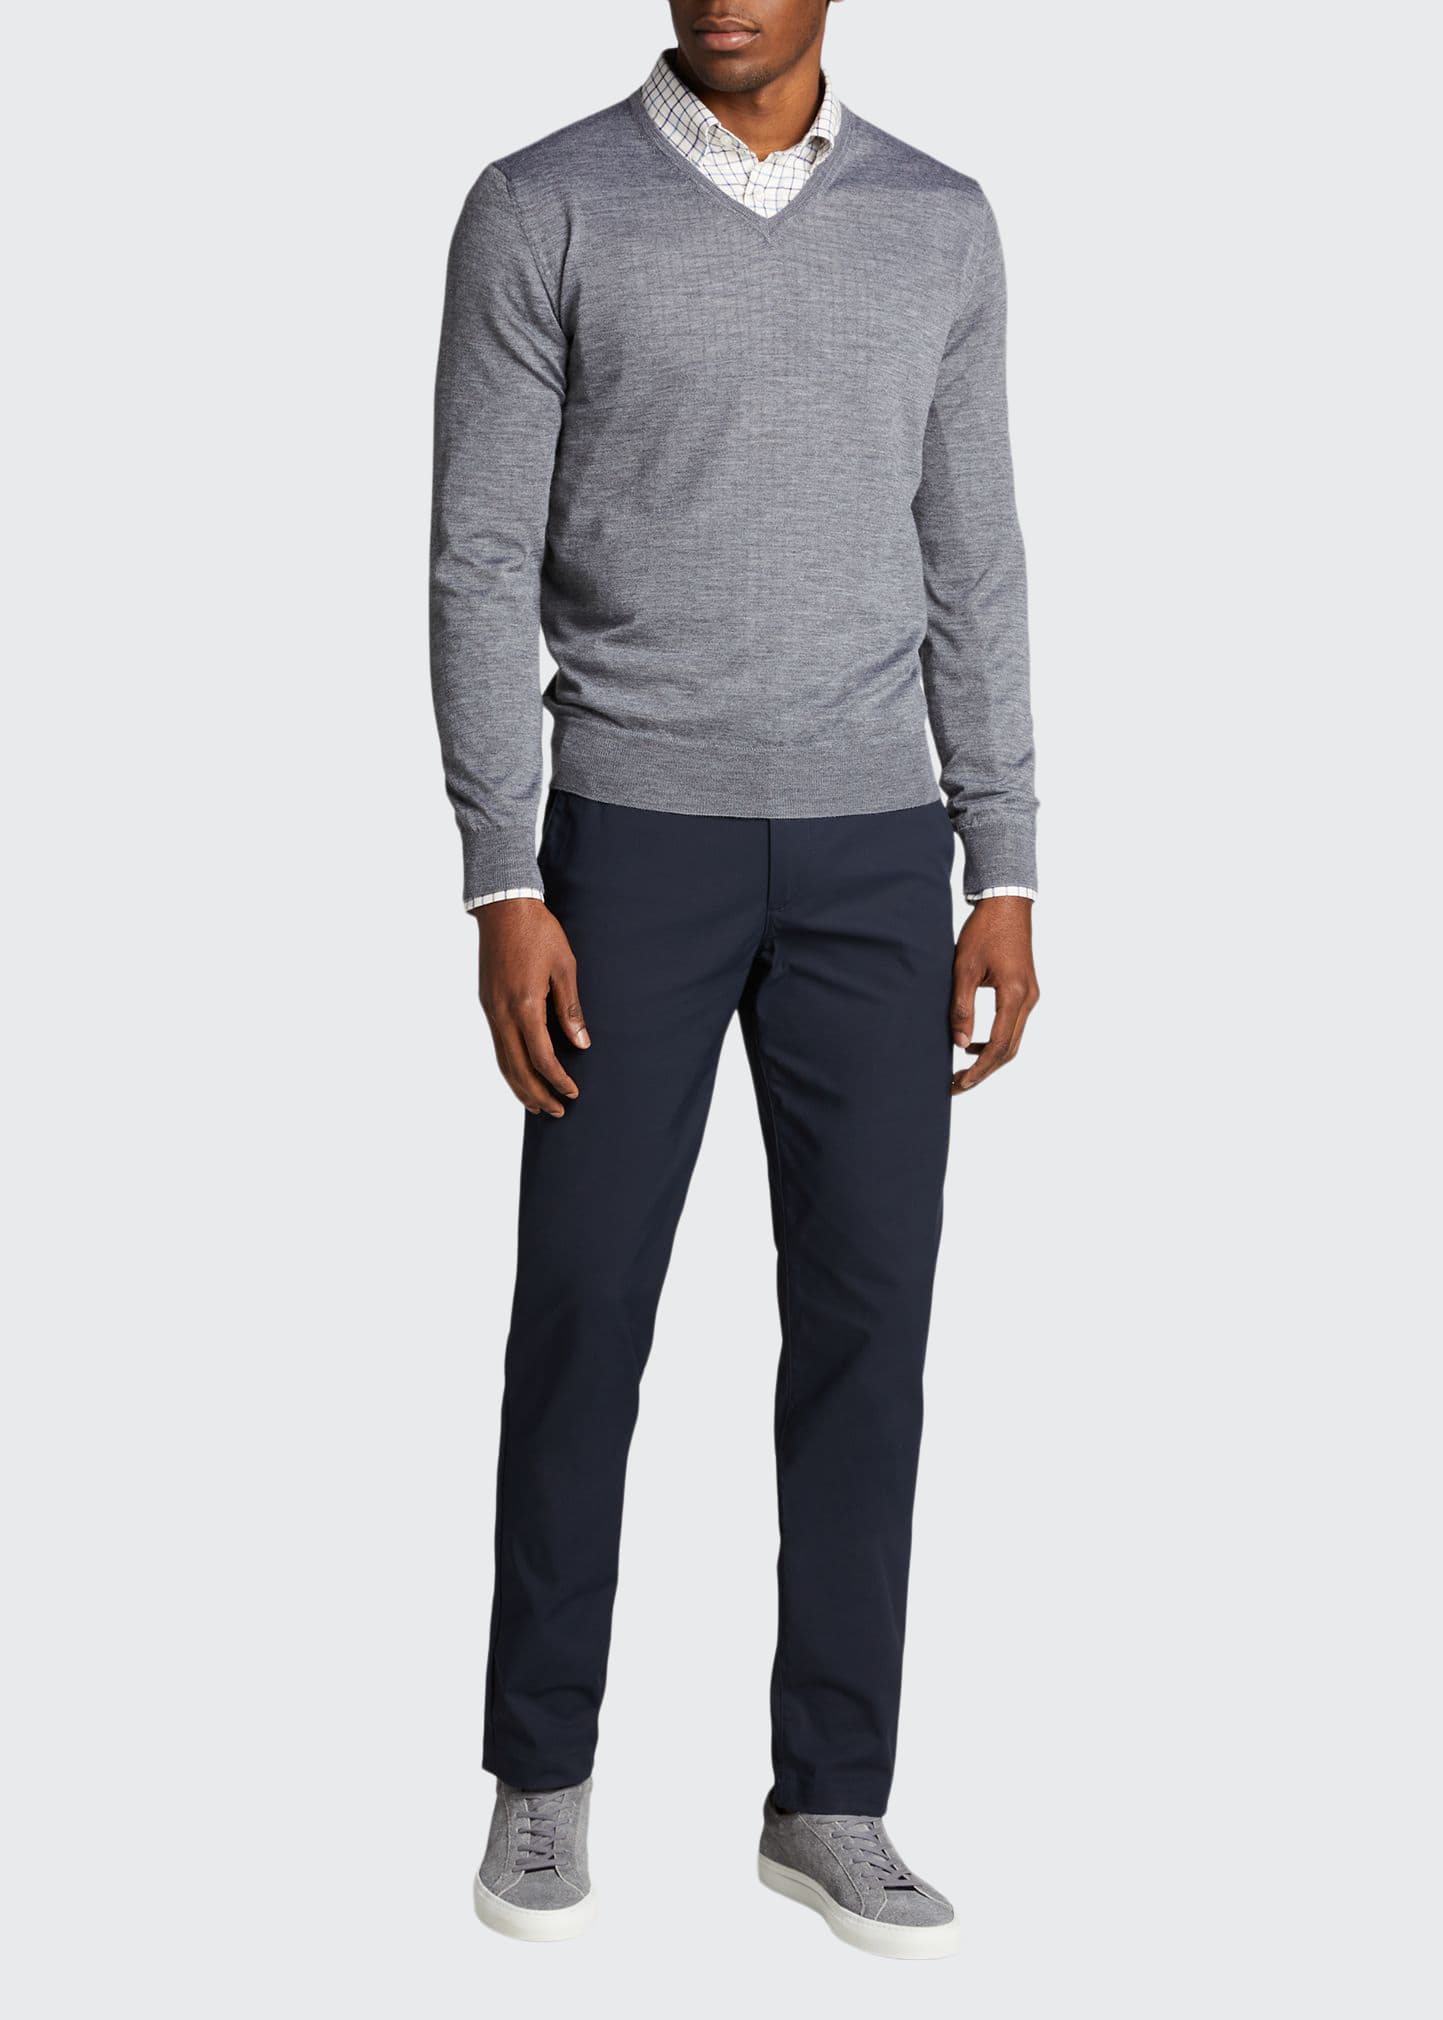 Bergdorf Goodman Men's Solid Cashmere V-Neck Sweater